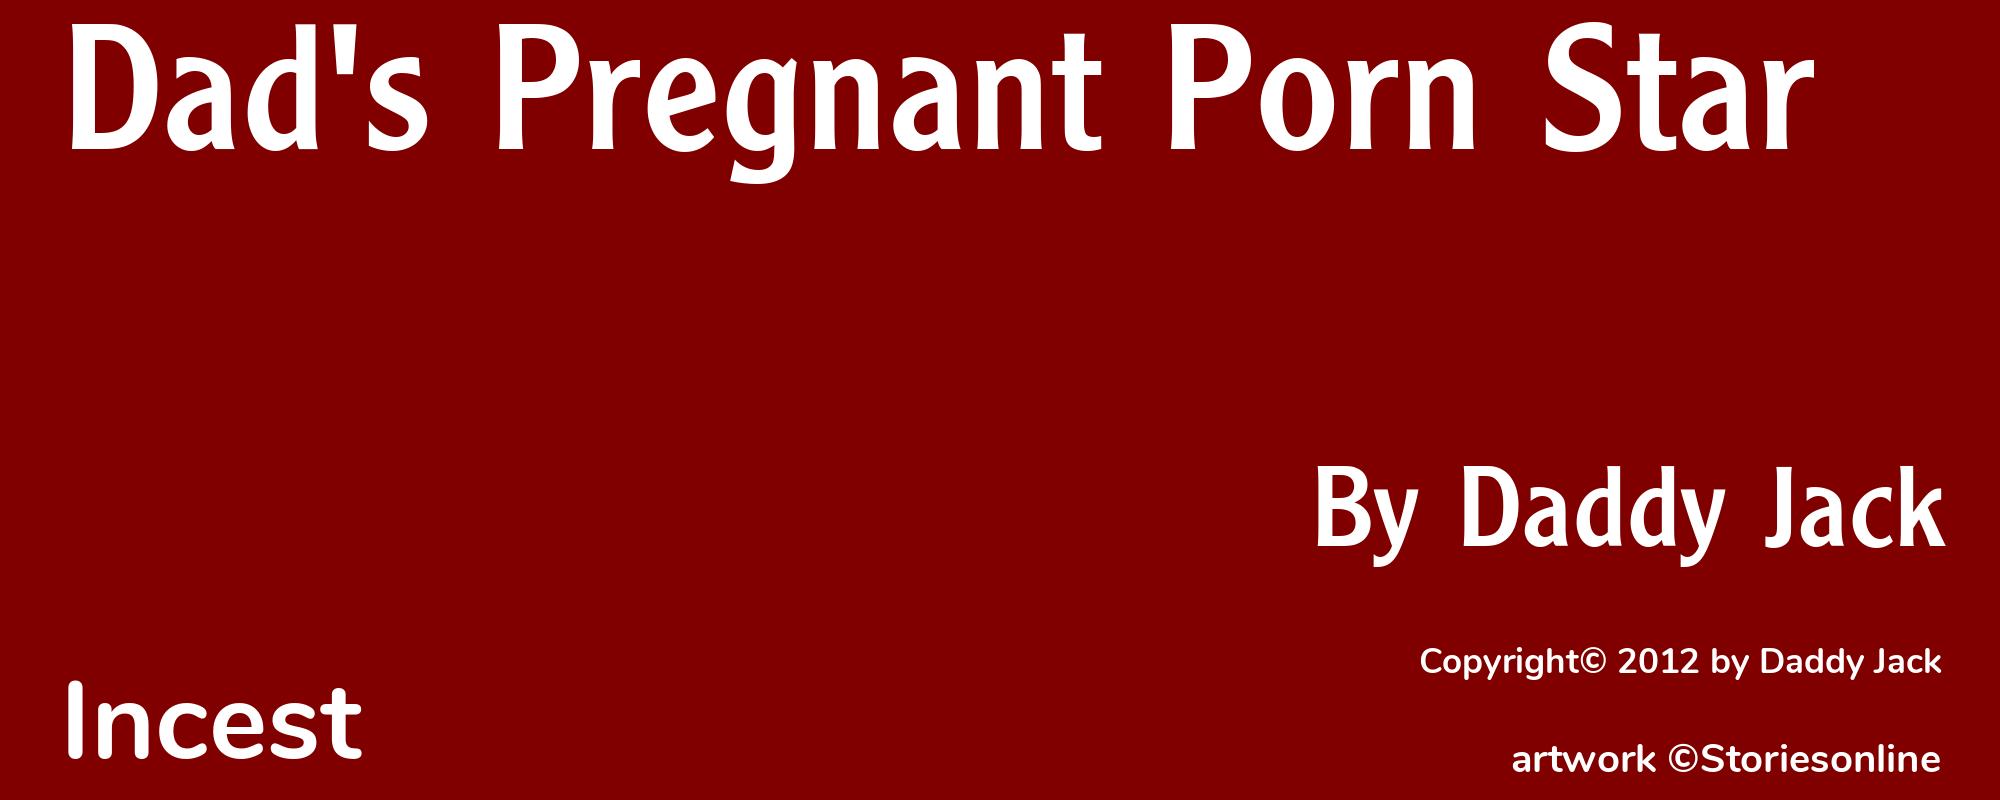 Dad's Pregnant Porn Star - Cover